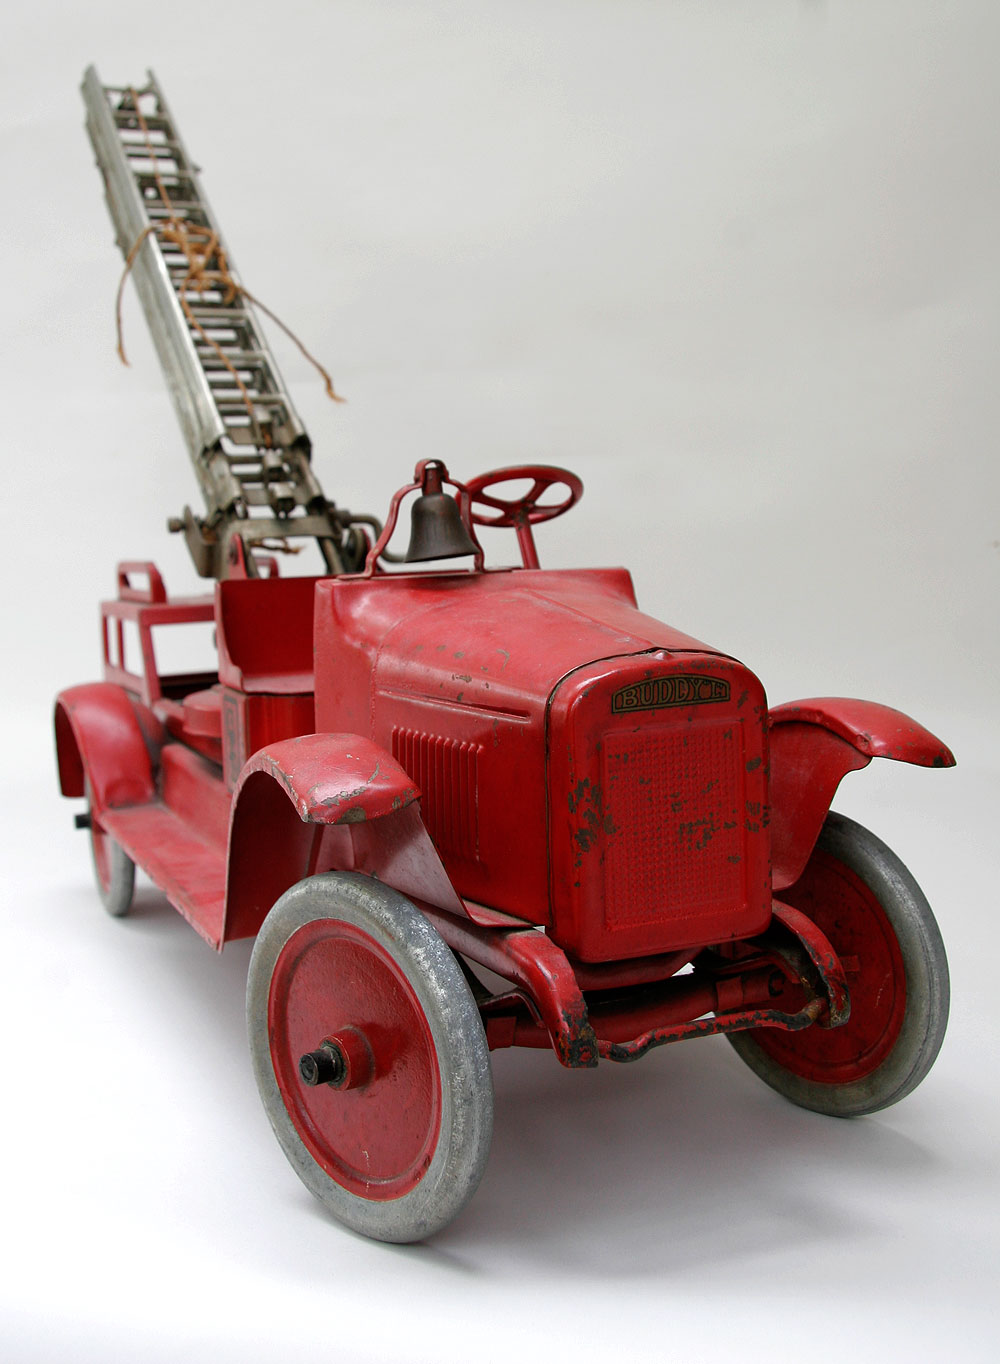 Buddy "L" Aerial Ladder Fire Truck Pressed Steel: Circa 1926-1930